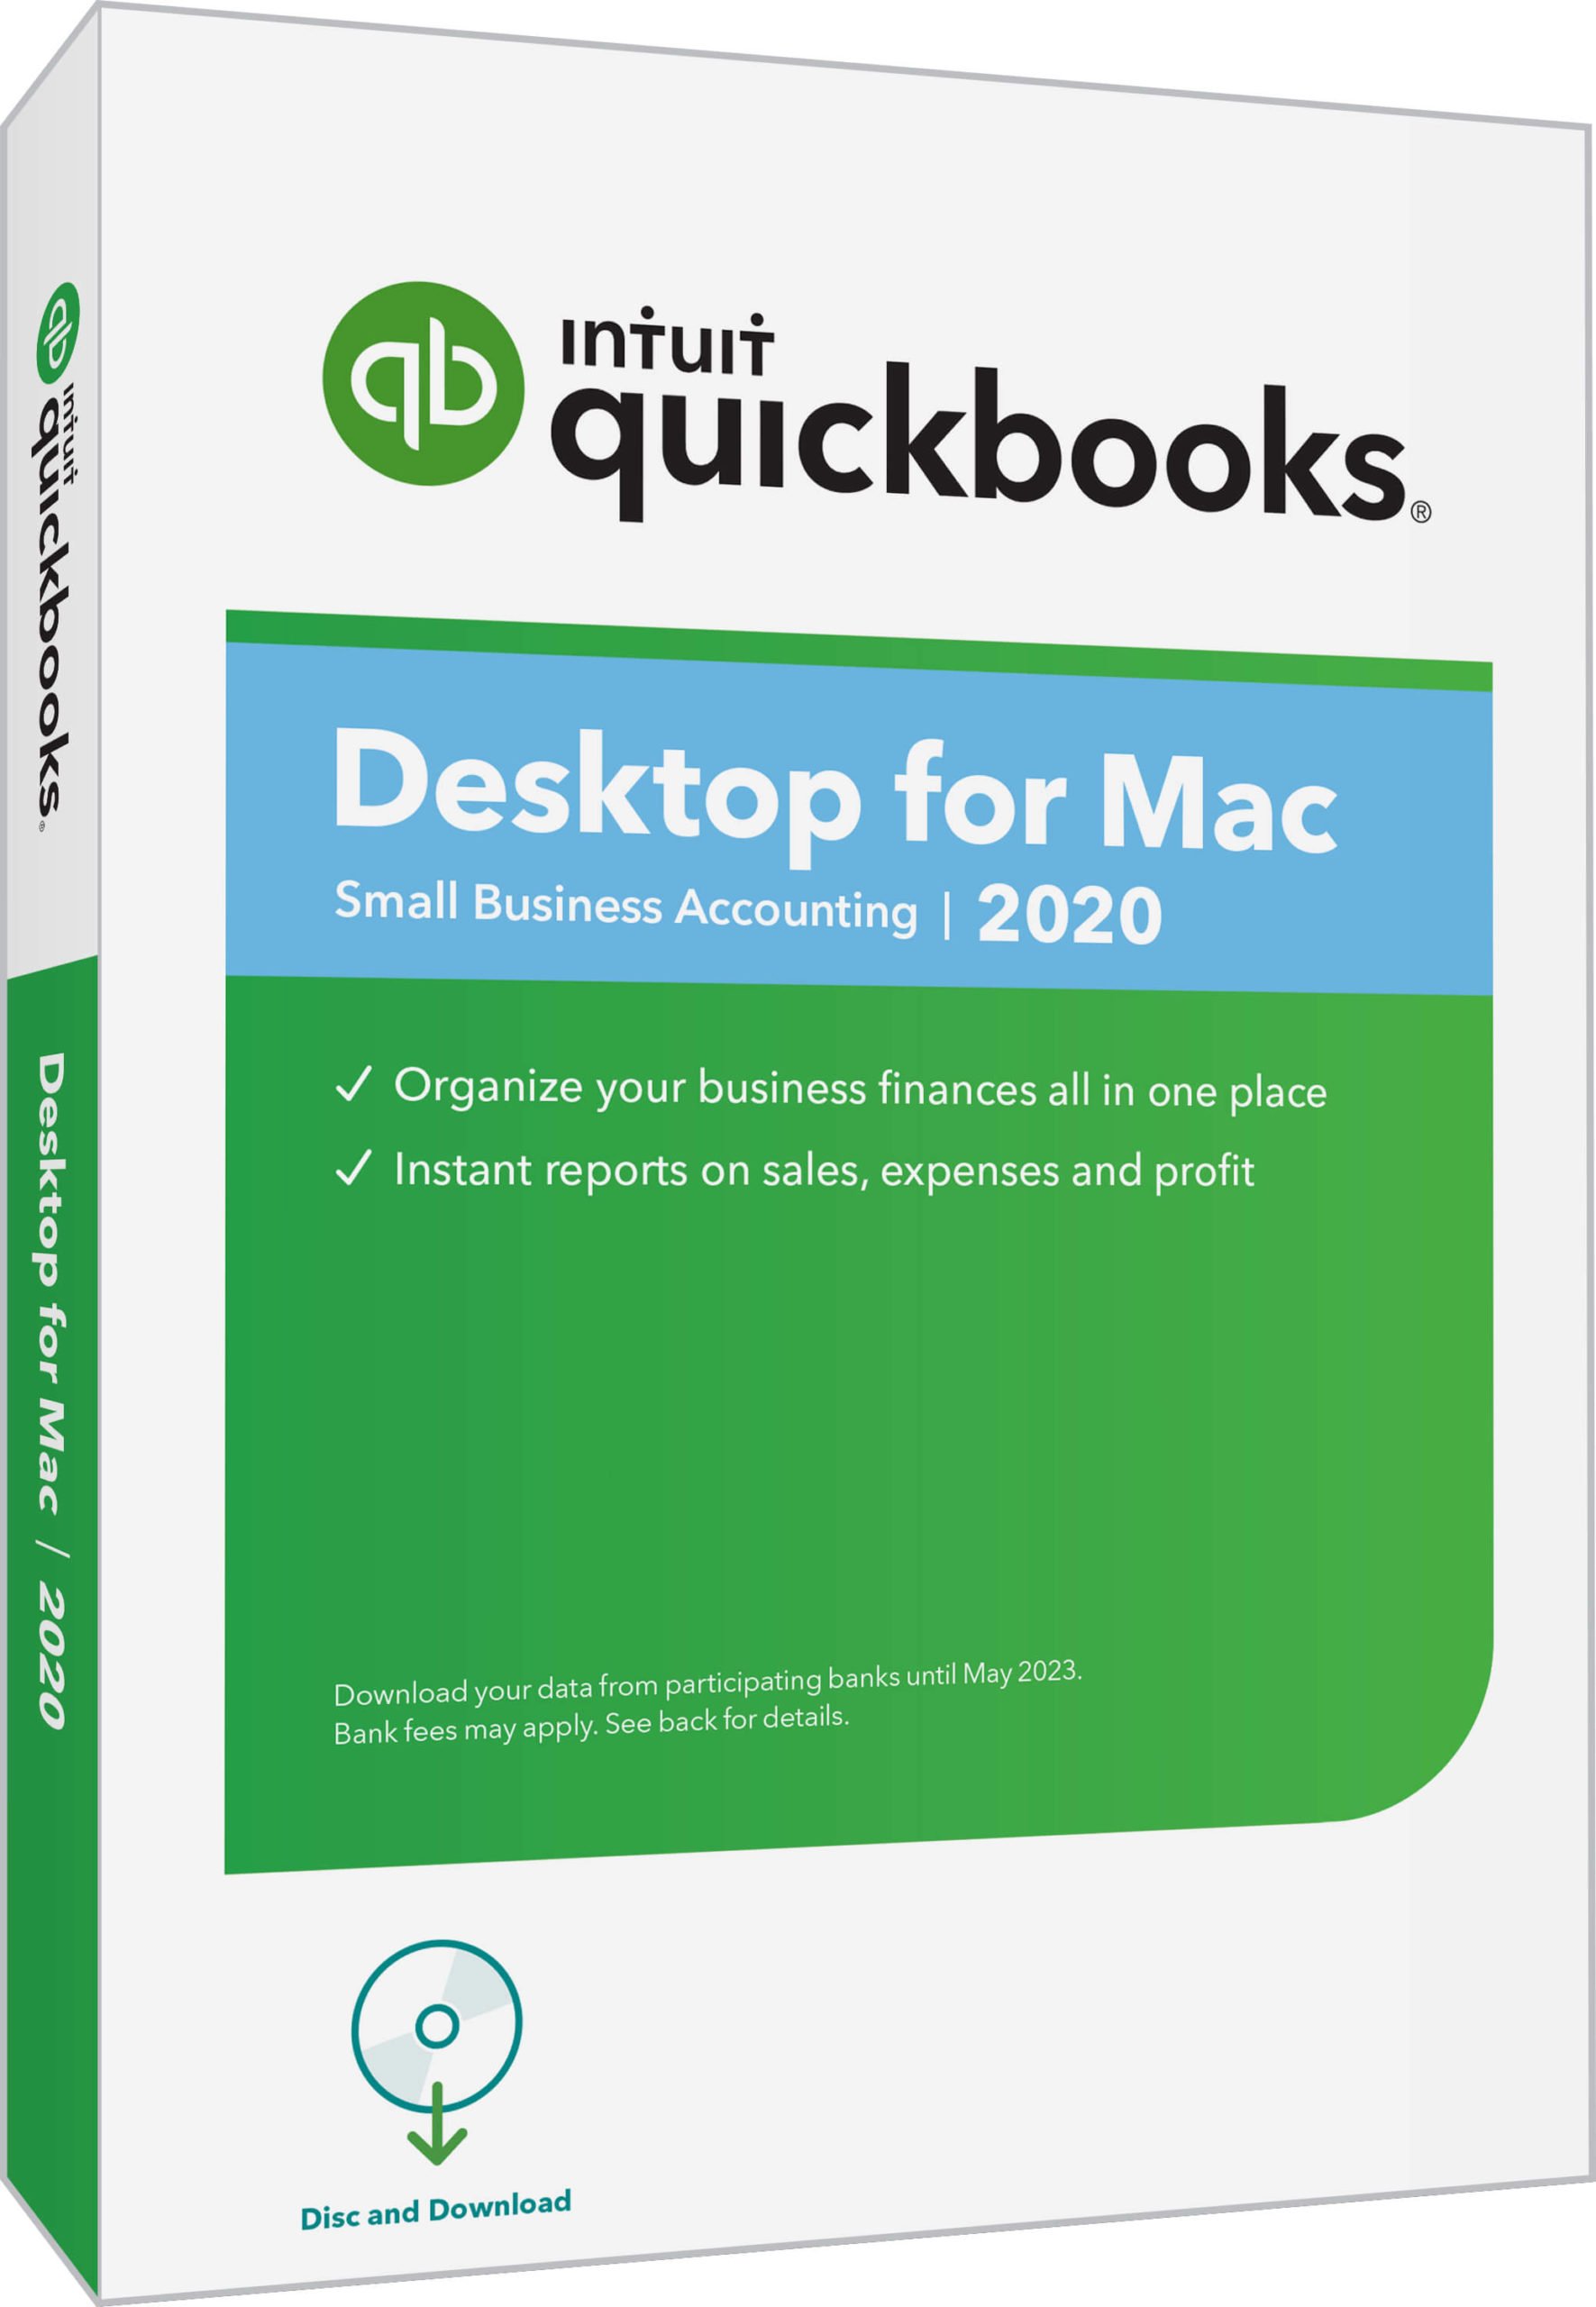 quickbooks update for mac os sierra